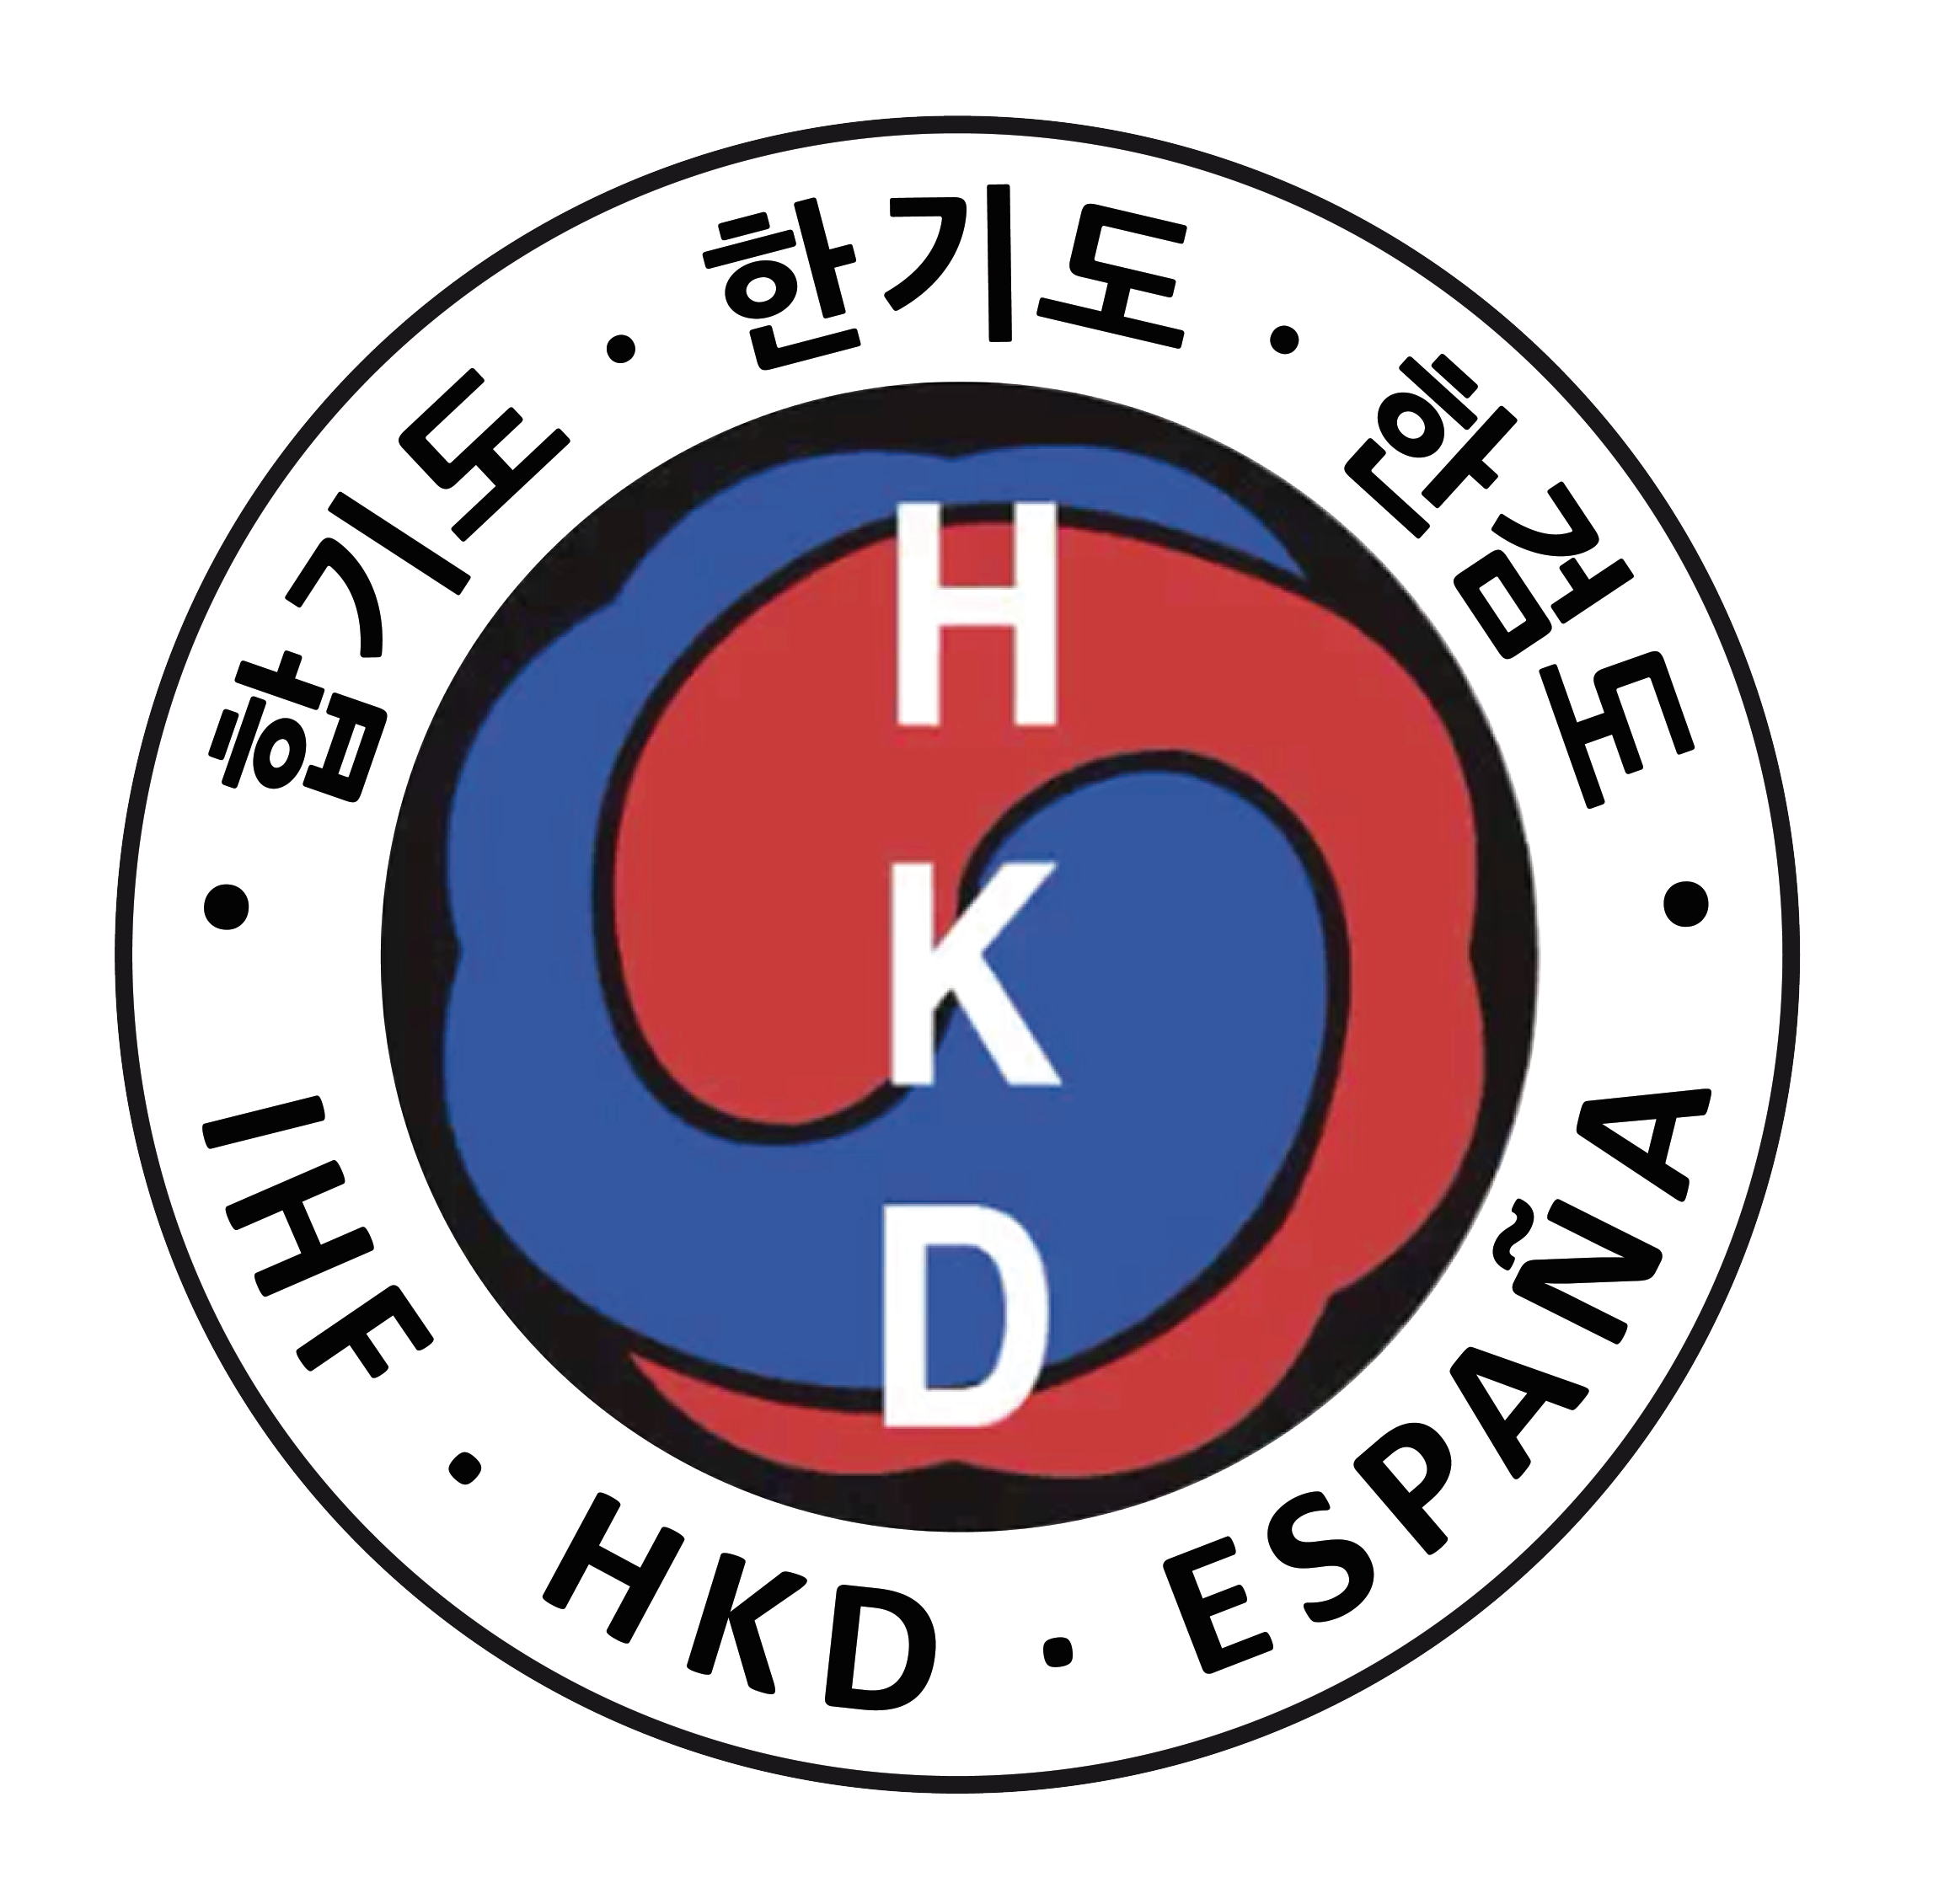 IHF HKD Spain Logo